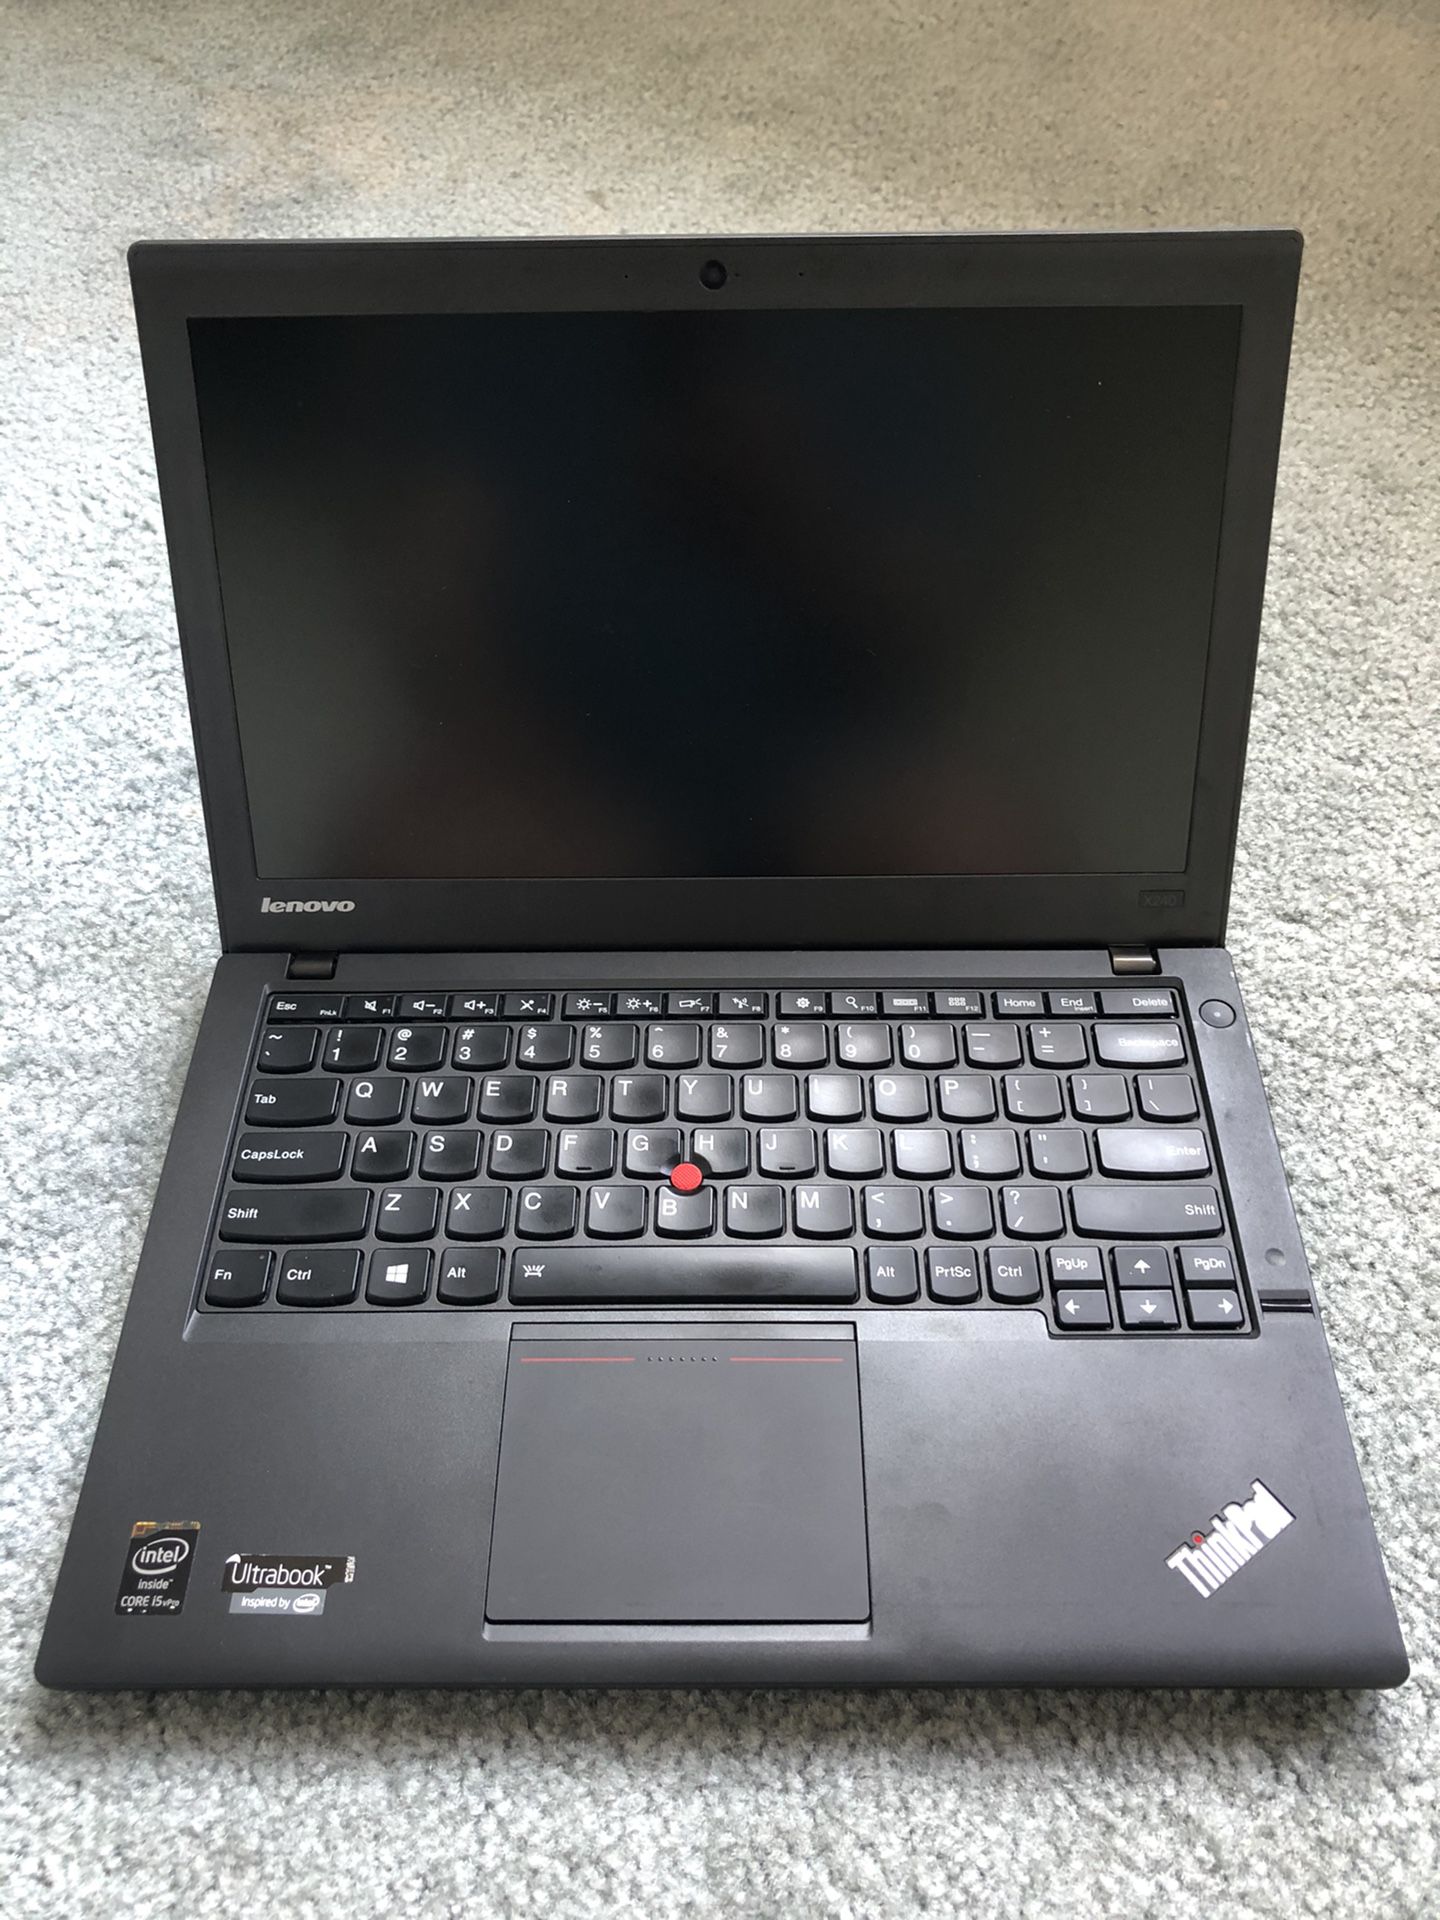 Lenovo x240 laptop